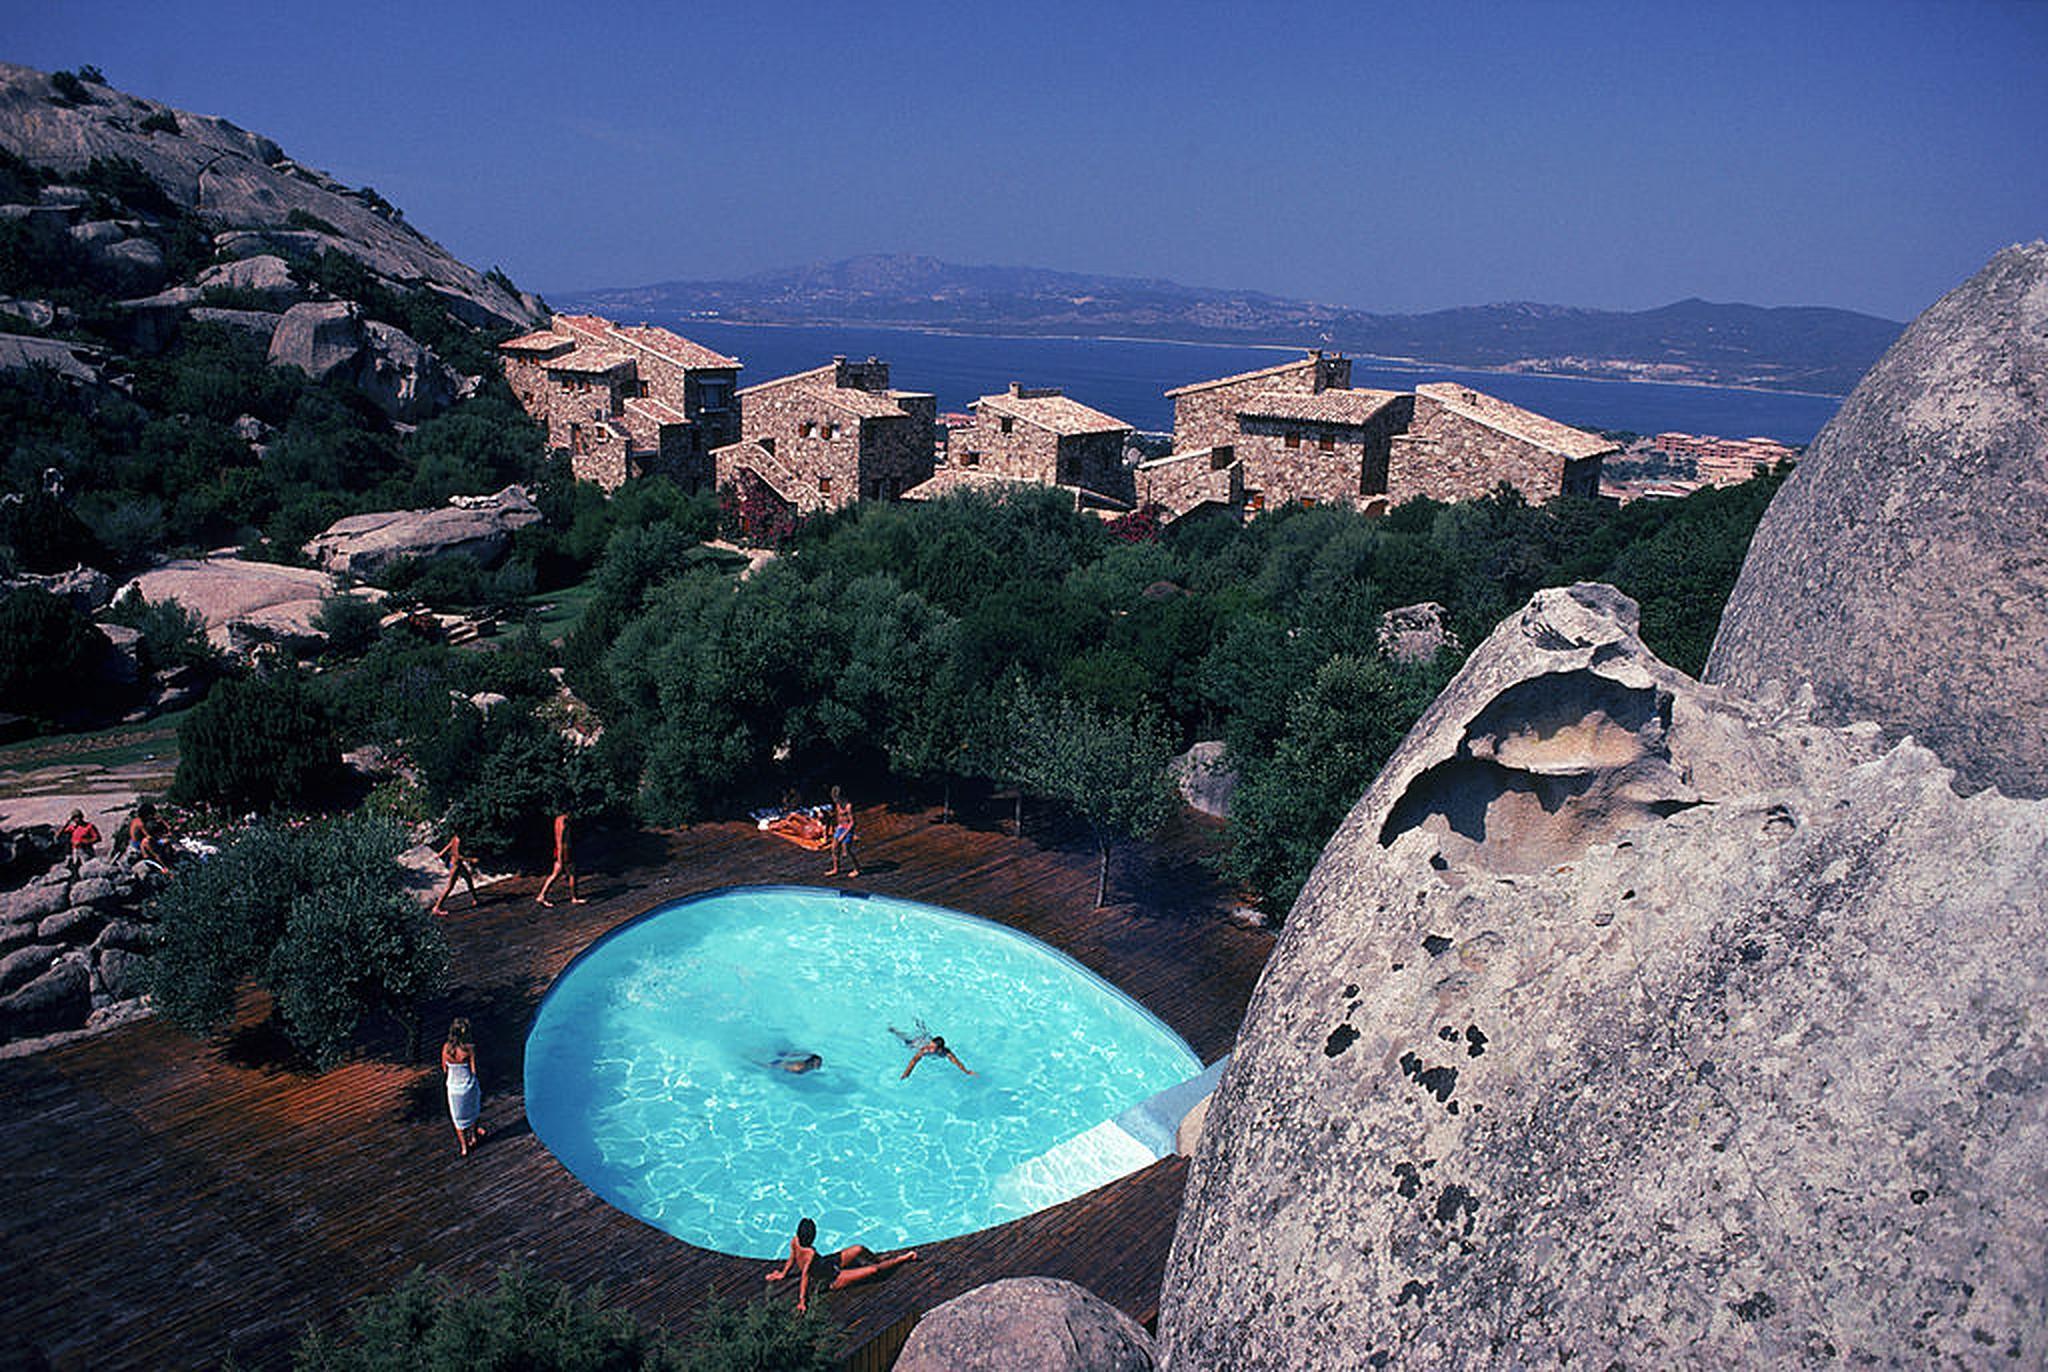 Pool in Porto Rotondo, Sardinien, Italien, August 1982 von Slim Aarons